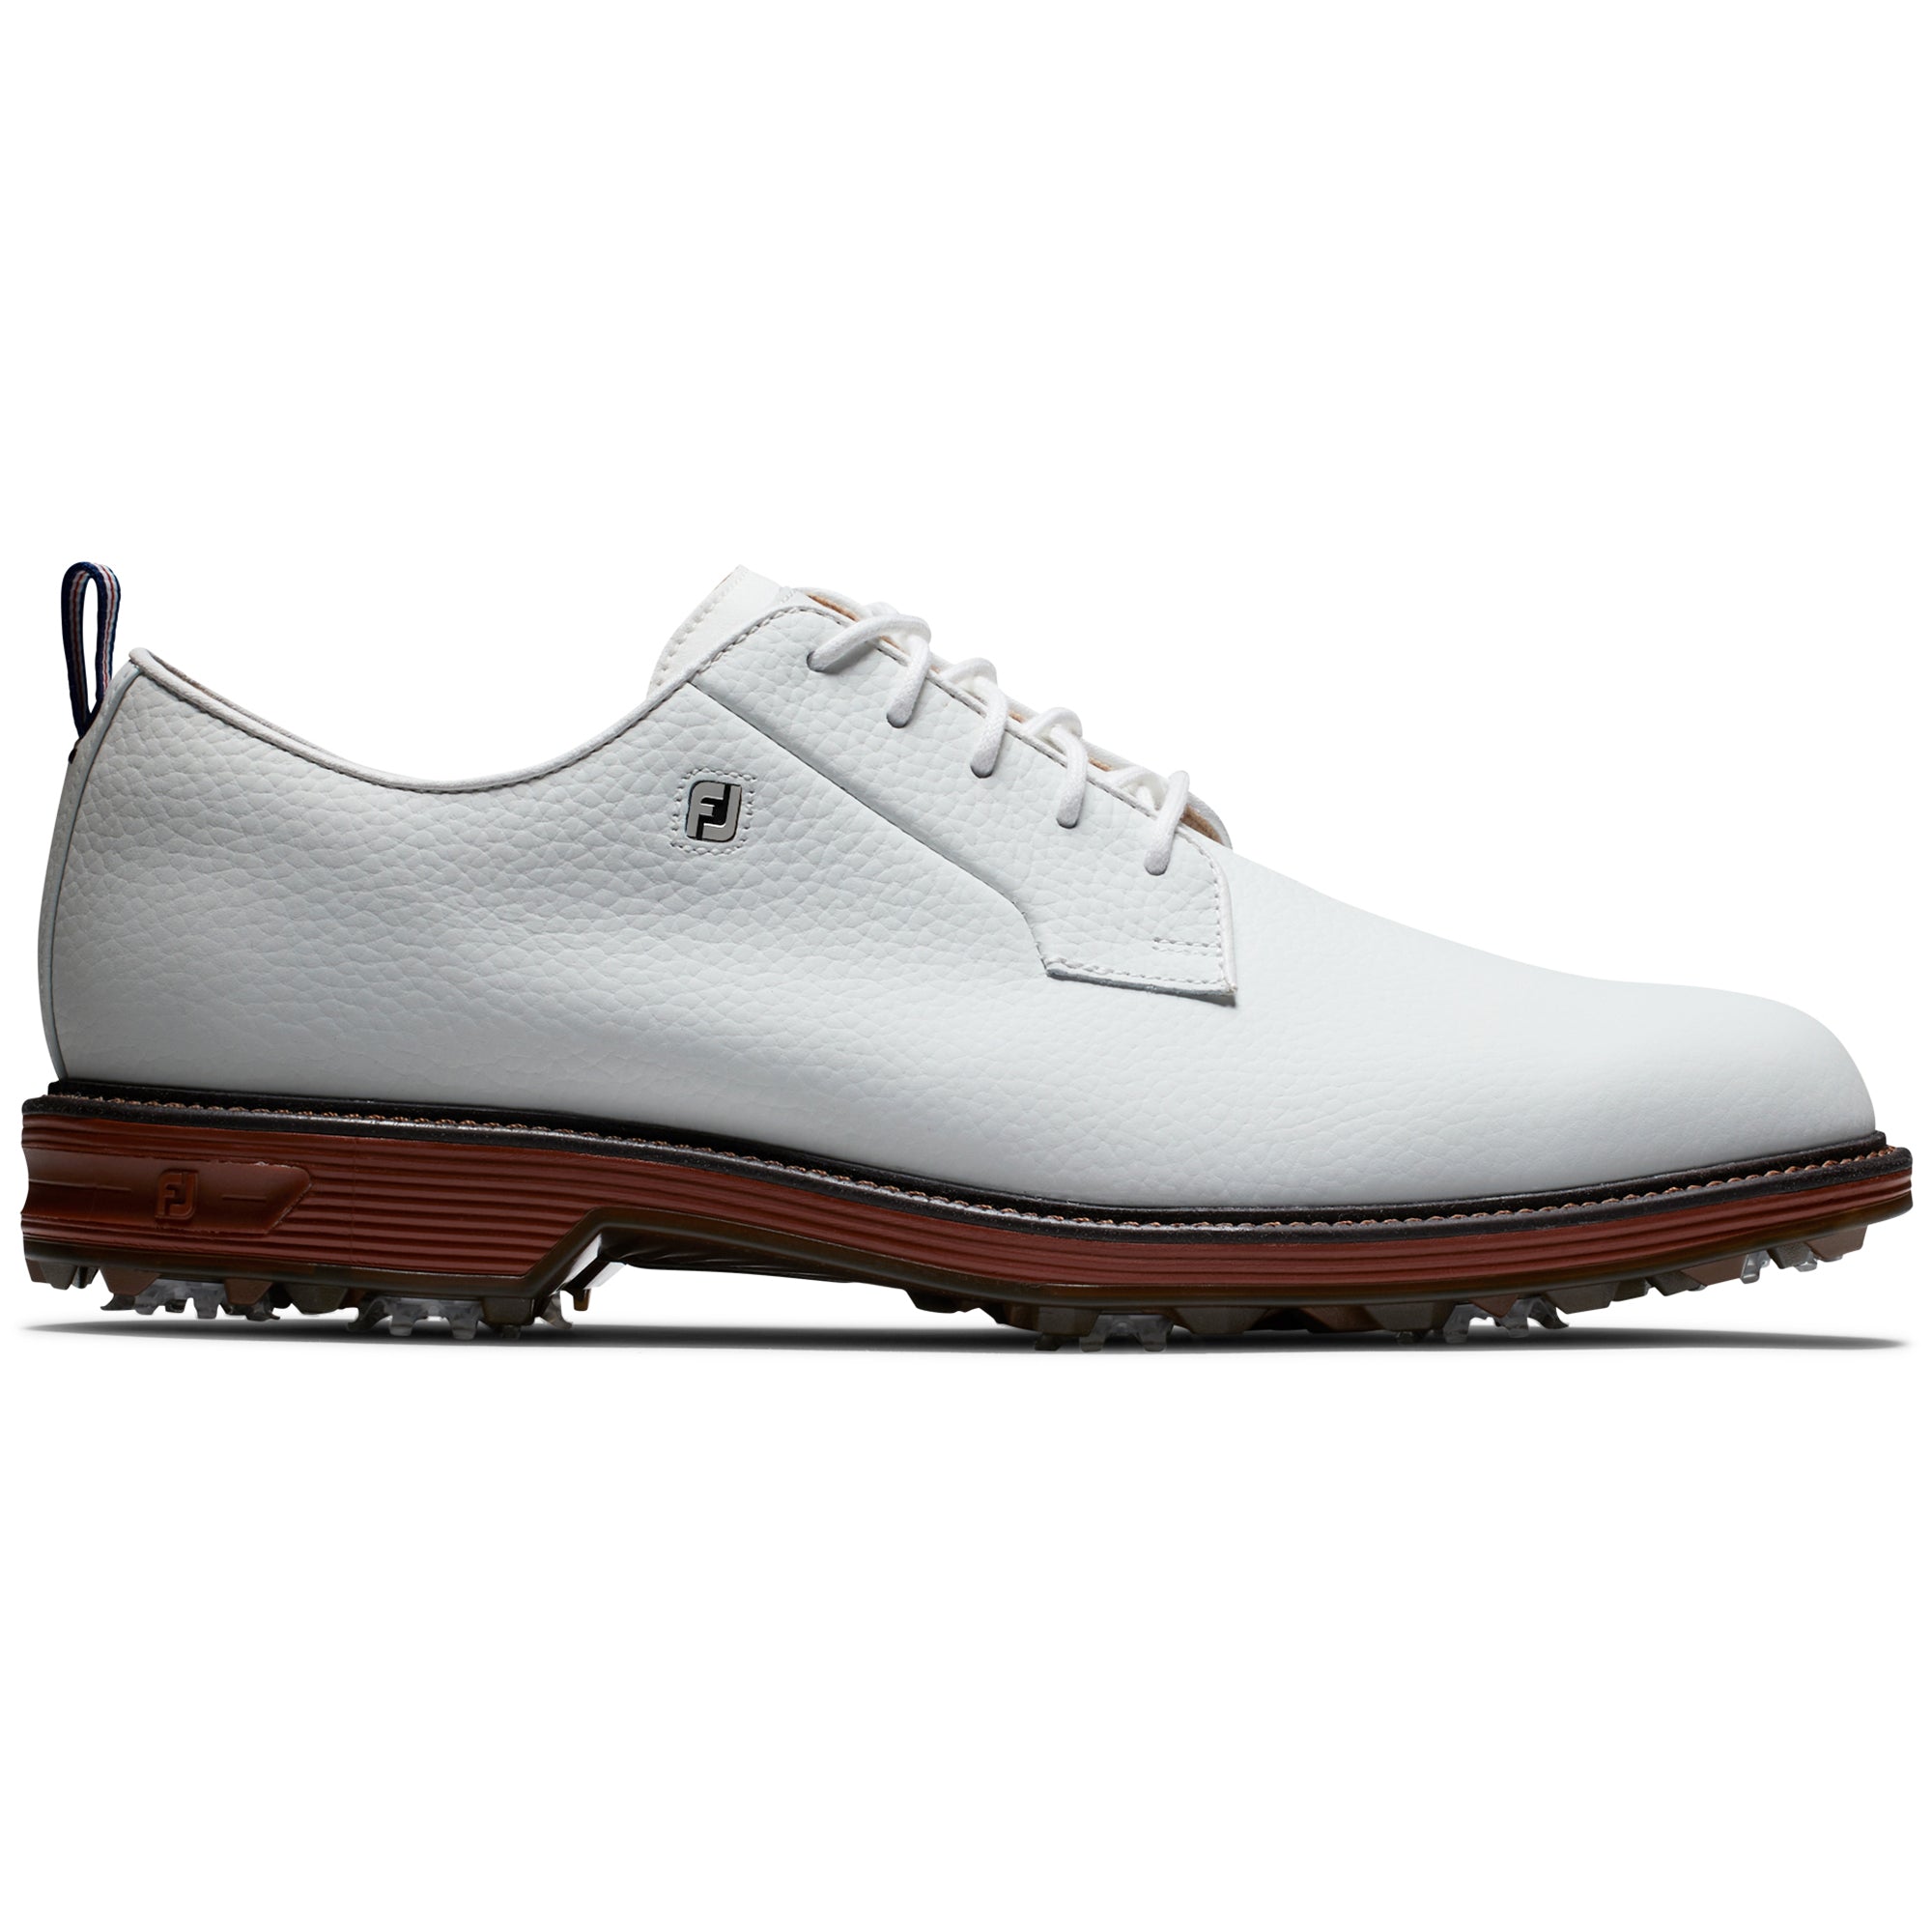 footjoy-premiere-series-field-golf-shoes-53992-white-brick